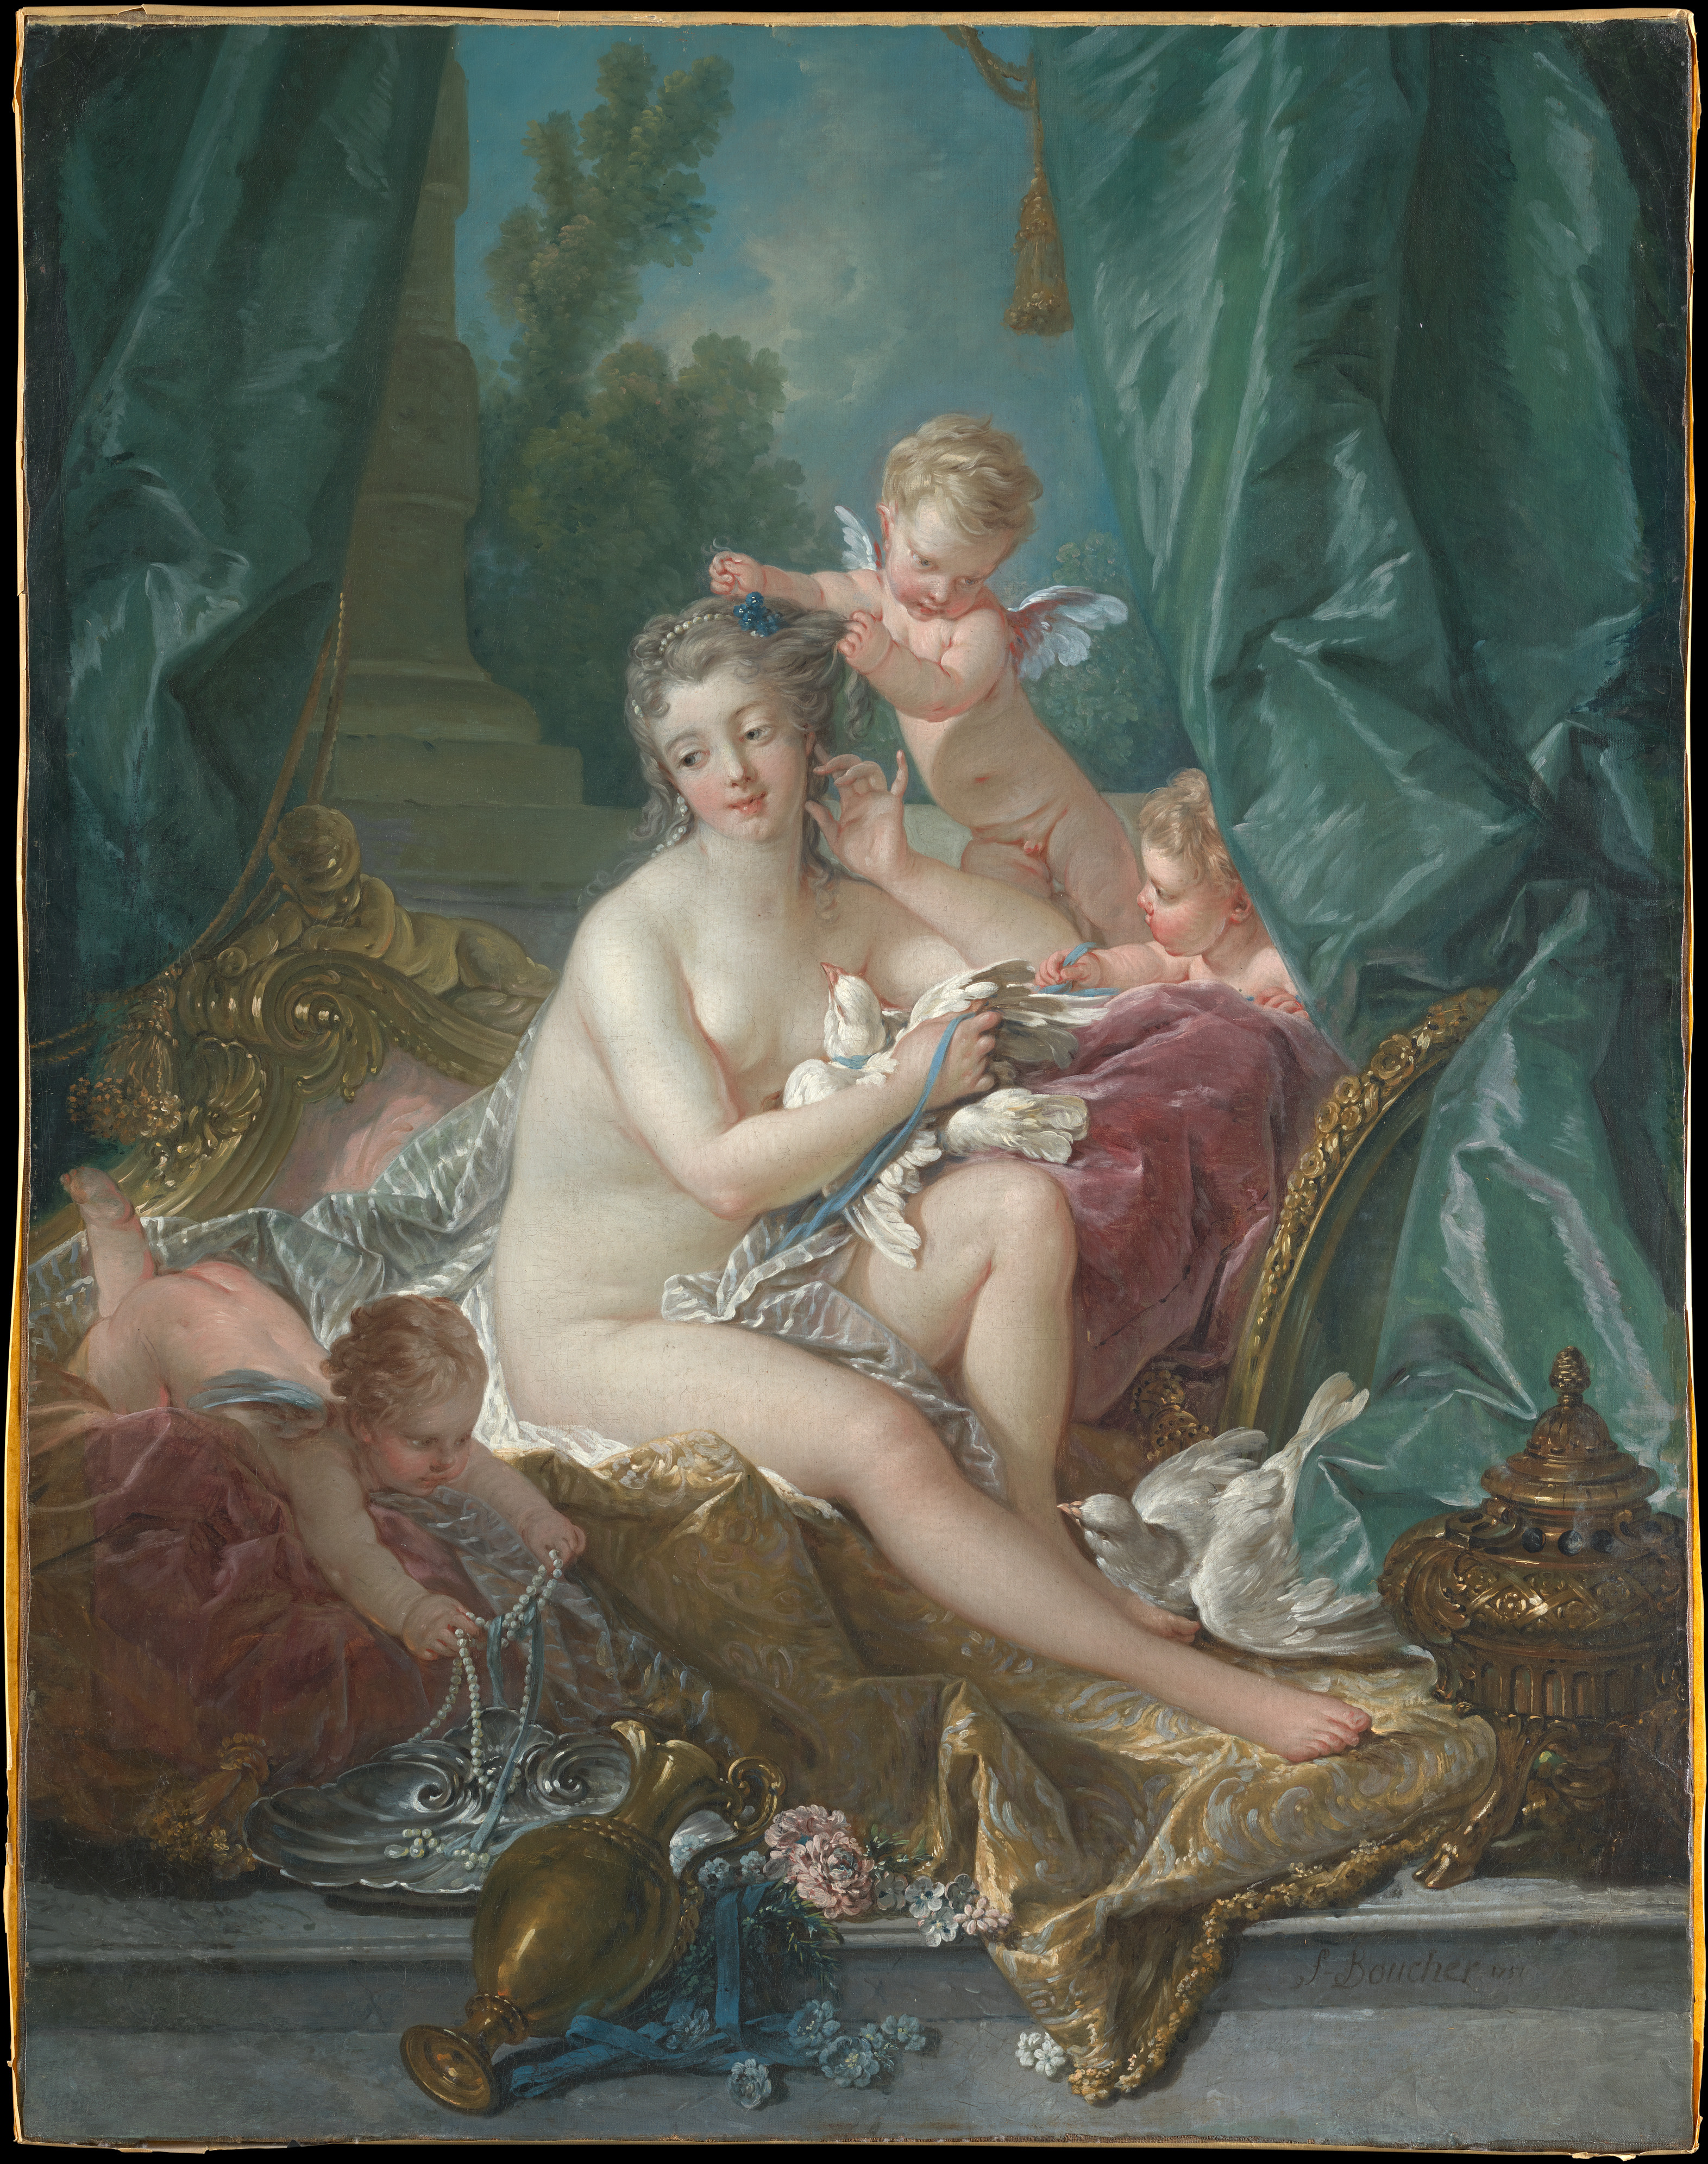 Toaleta Wenus by Francois Boucher - 1751 - 108.3 x 85.1 cm 